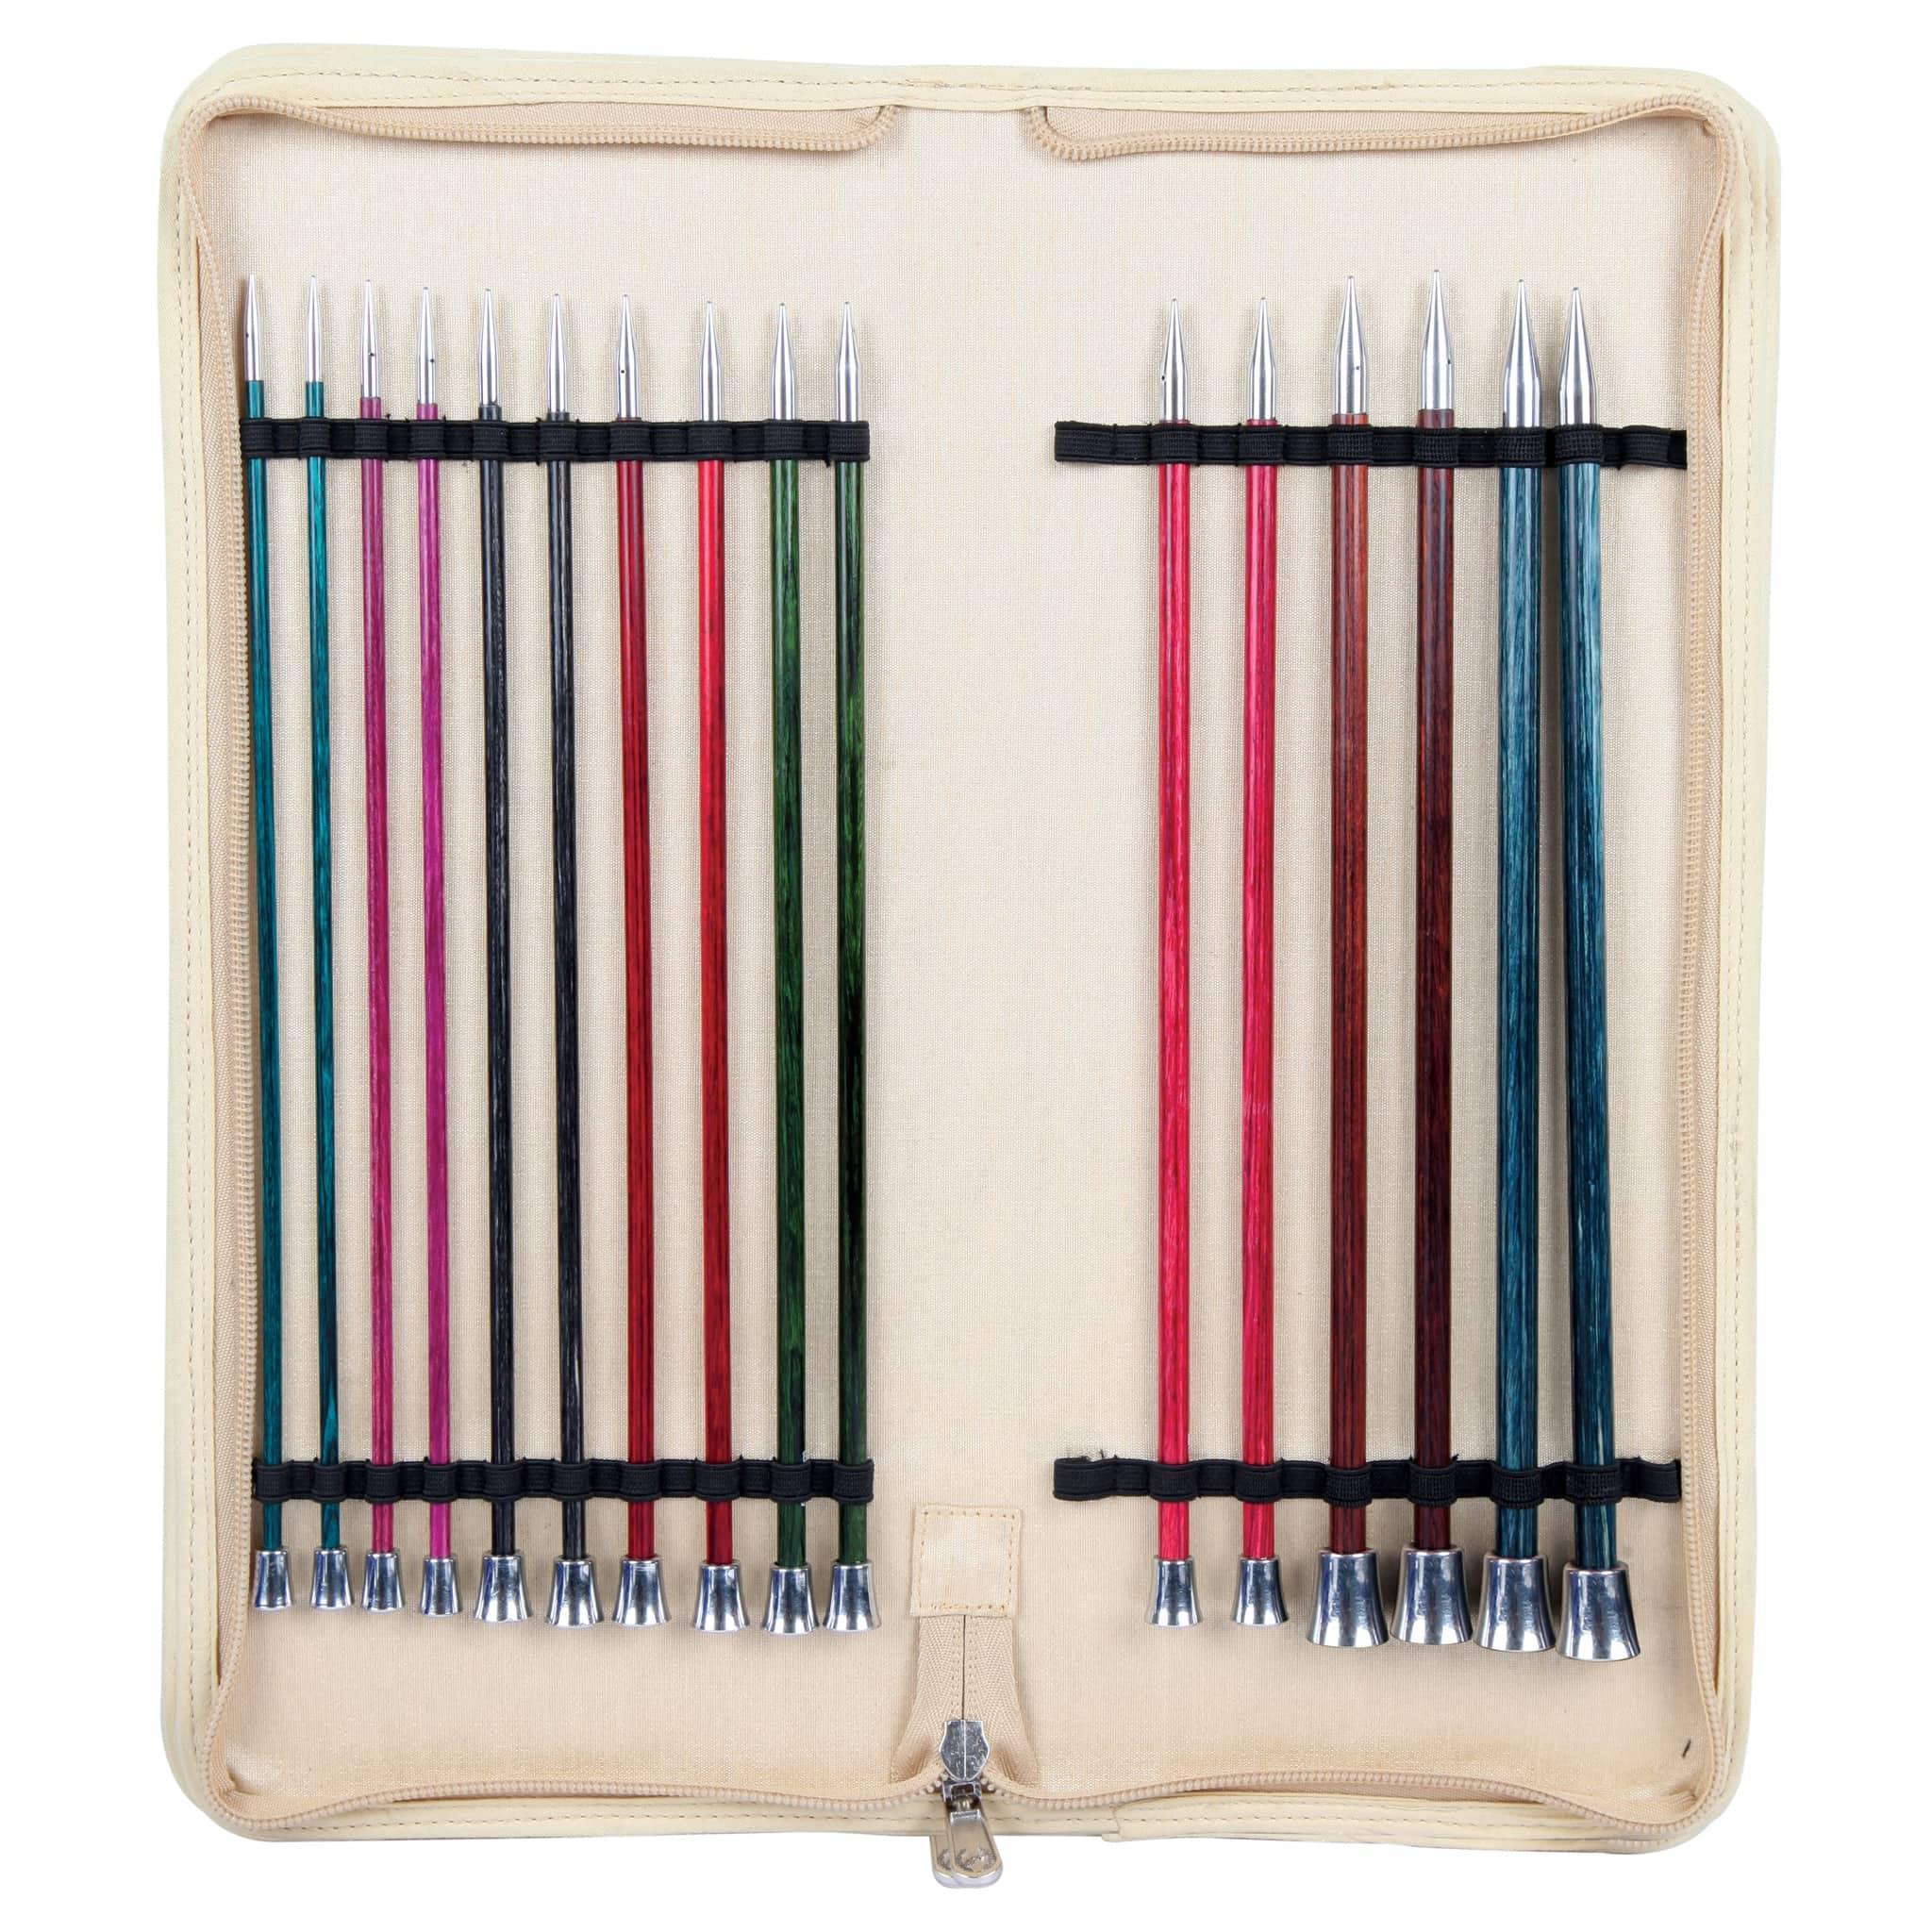 Knitpro Royale Knitting Pins - Single Ended Set - Woolshop.co.uk